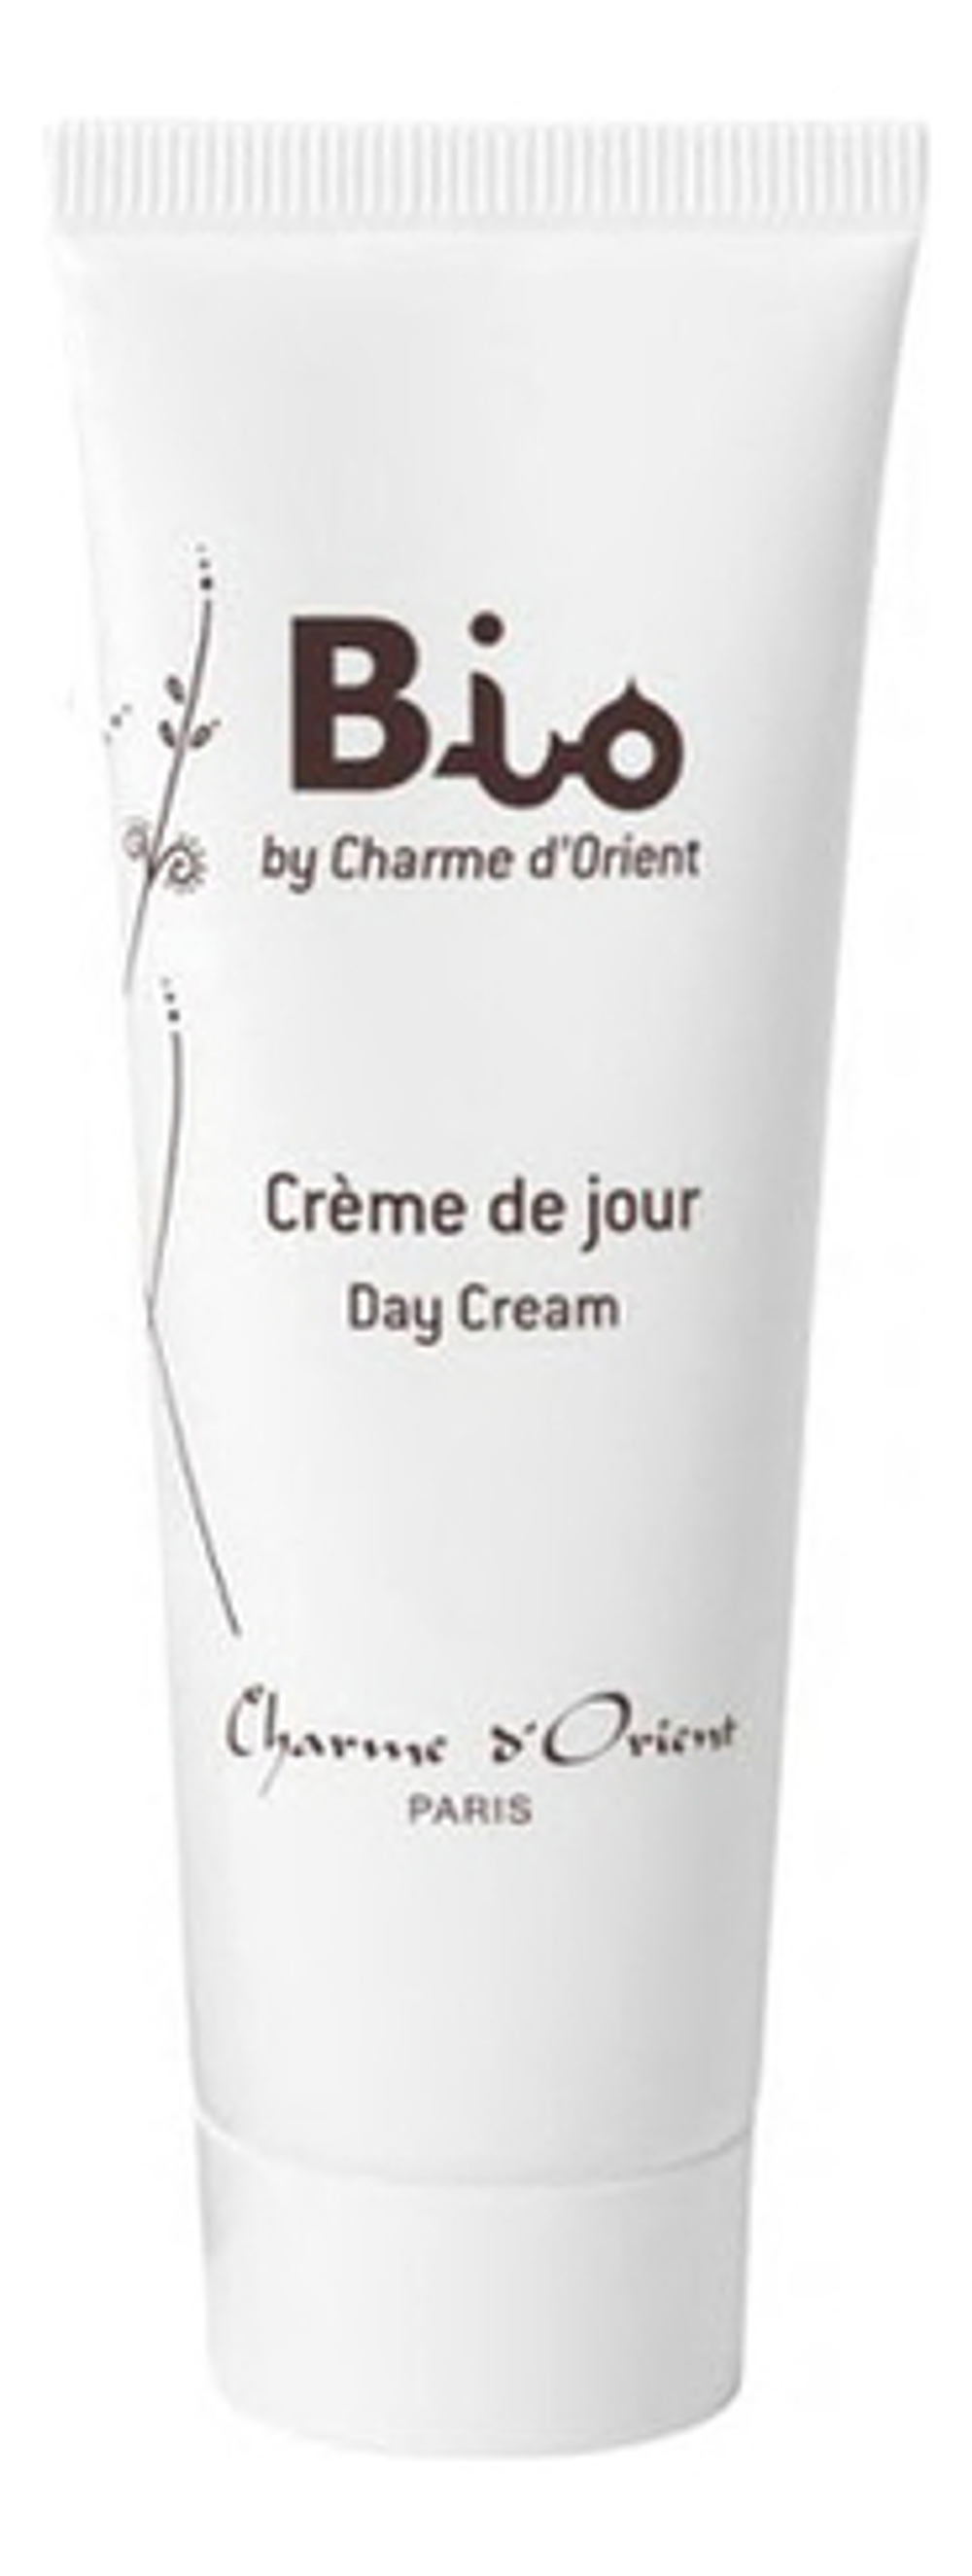 CHARME D'ORIENT Дневной крем (линия Bio)  Bio by Charme d’Orient - Crème de jour  Day cream (Шарм ди Ориент) 50 мл